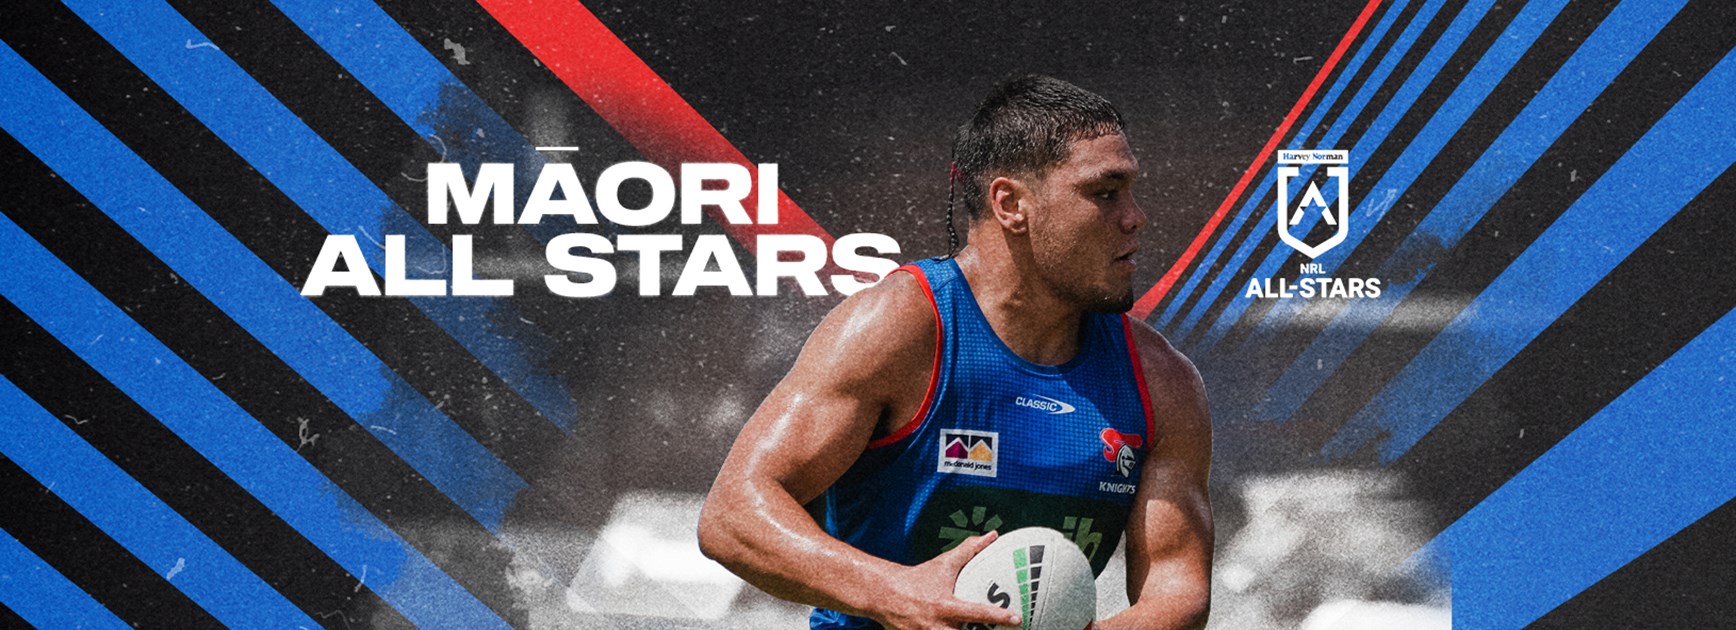 Leo Thompson selected for NZ Māori All Stars